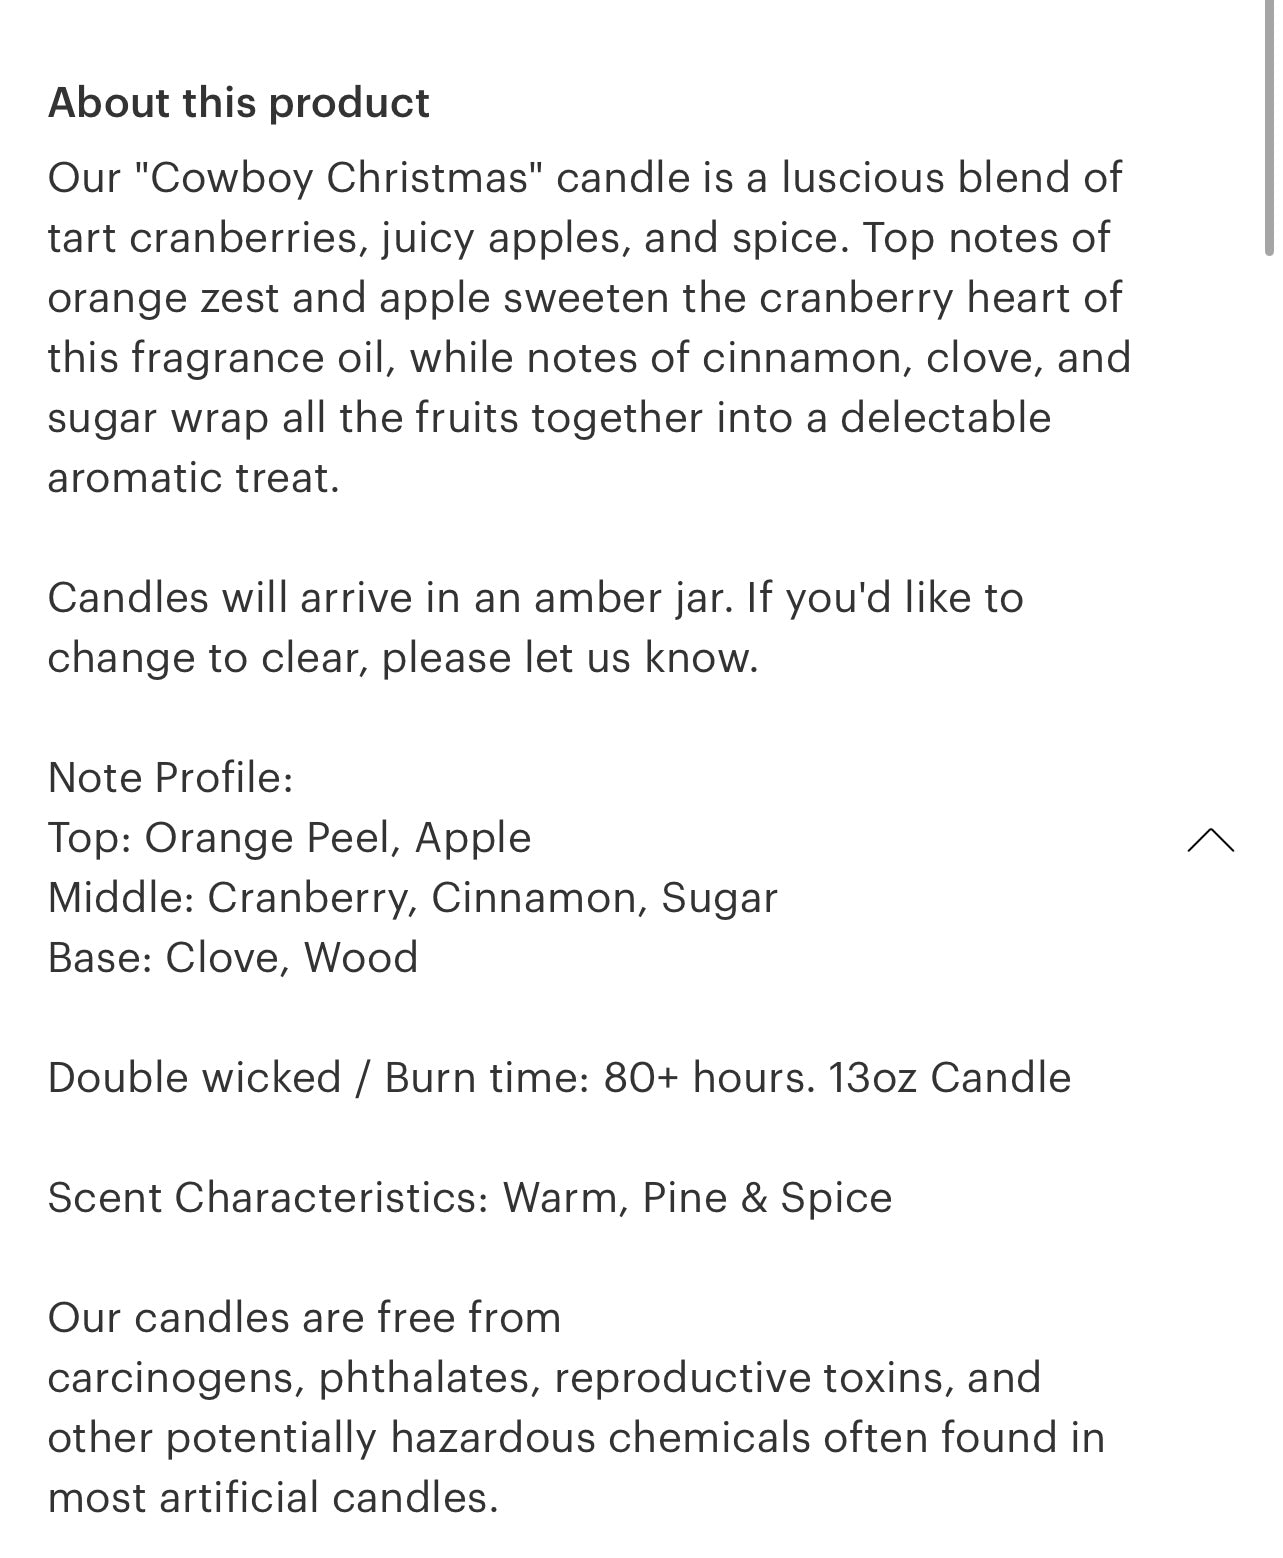 Cowboy Christmas Candle